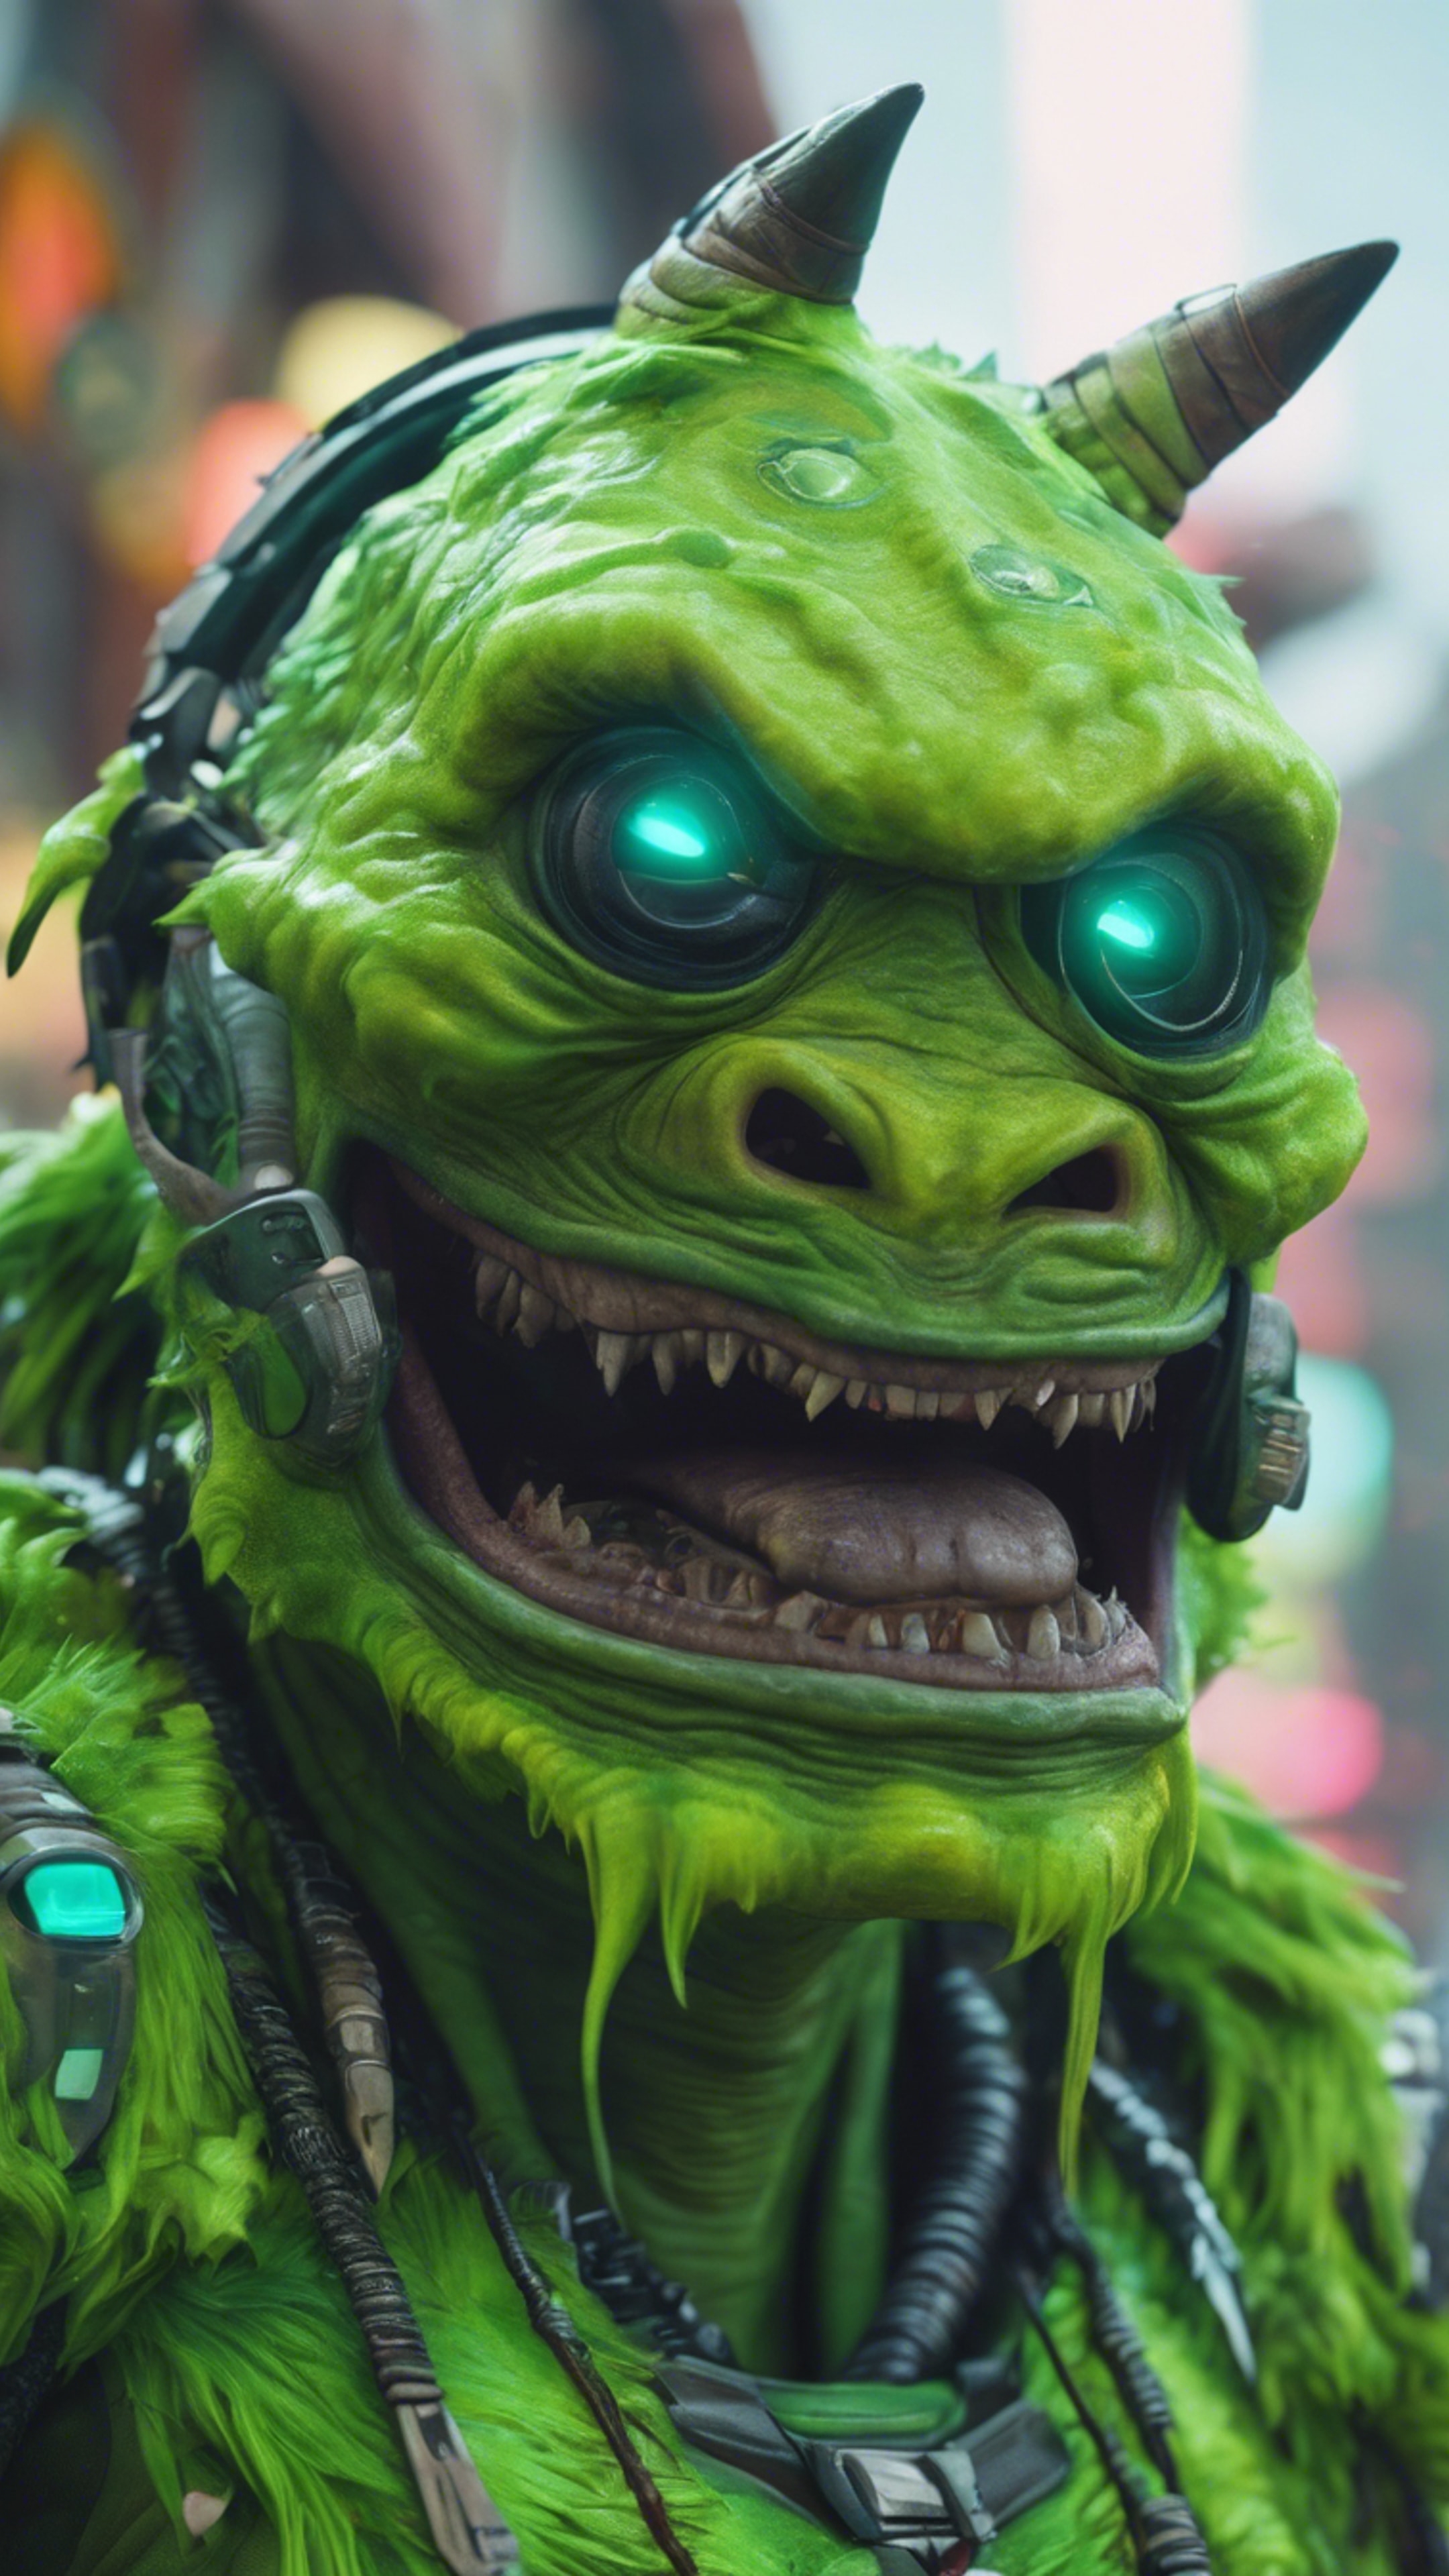 A neon green monster avatar in a popular video game Tapeta[af5fbbdb1ec04a35bd90]